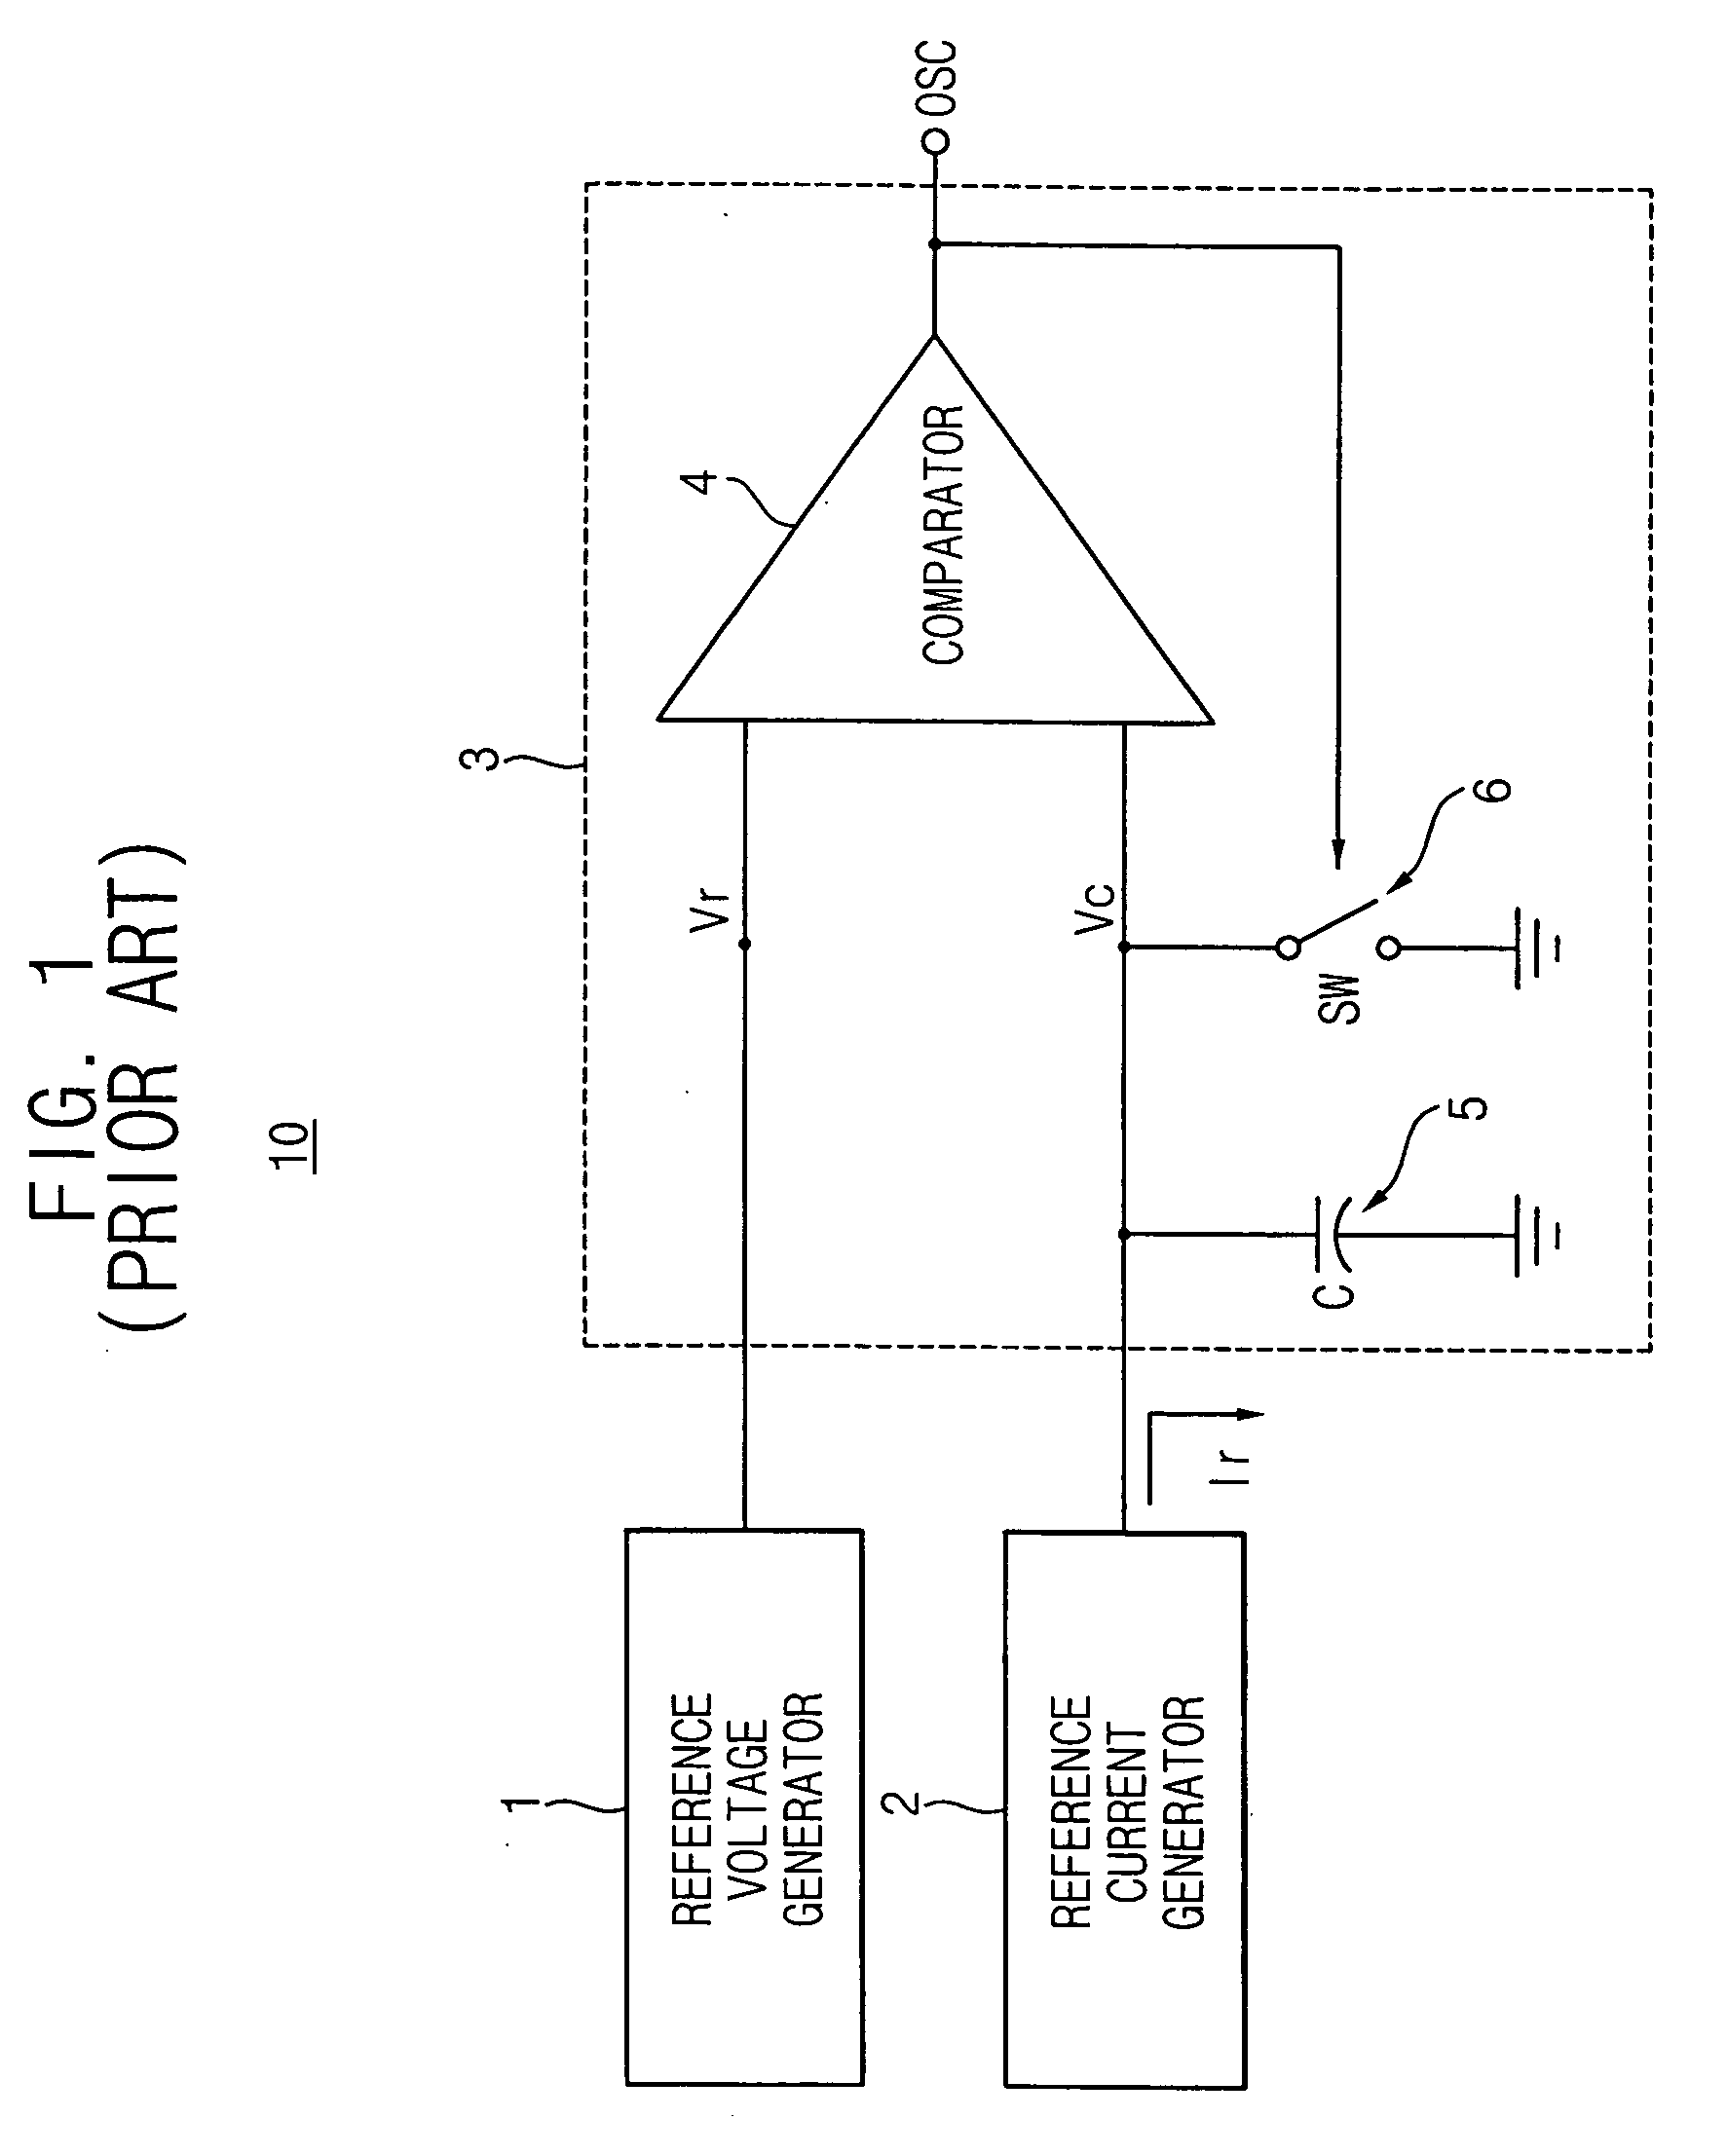 Oscillator circuit and method for adjusting oscillation frequency of same